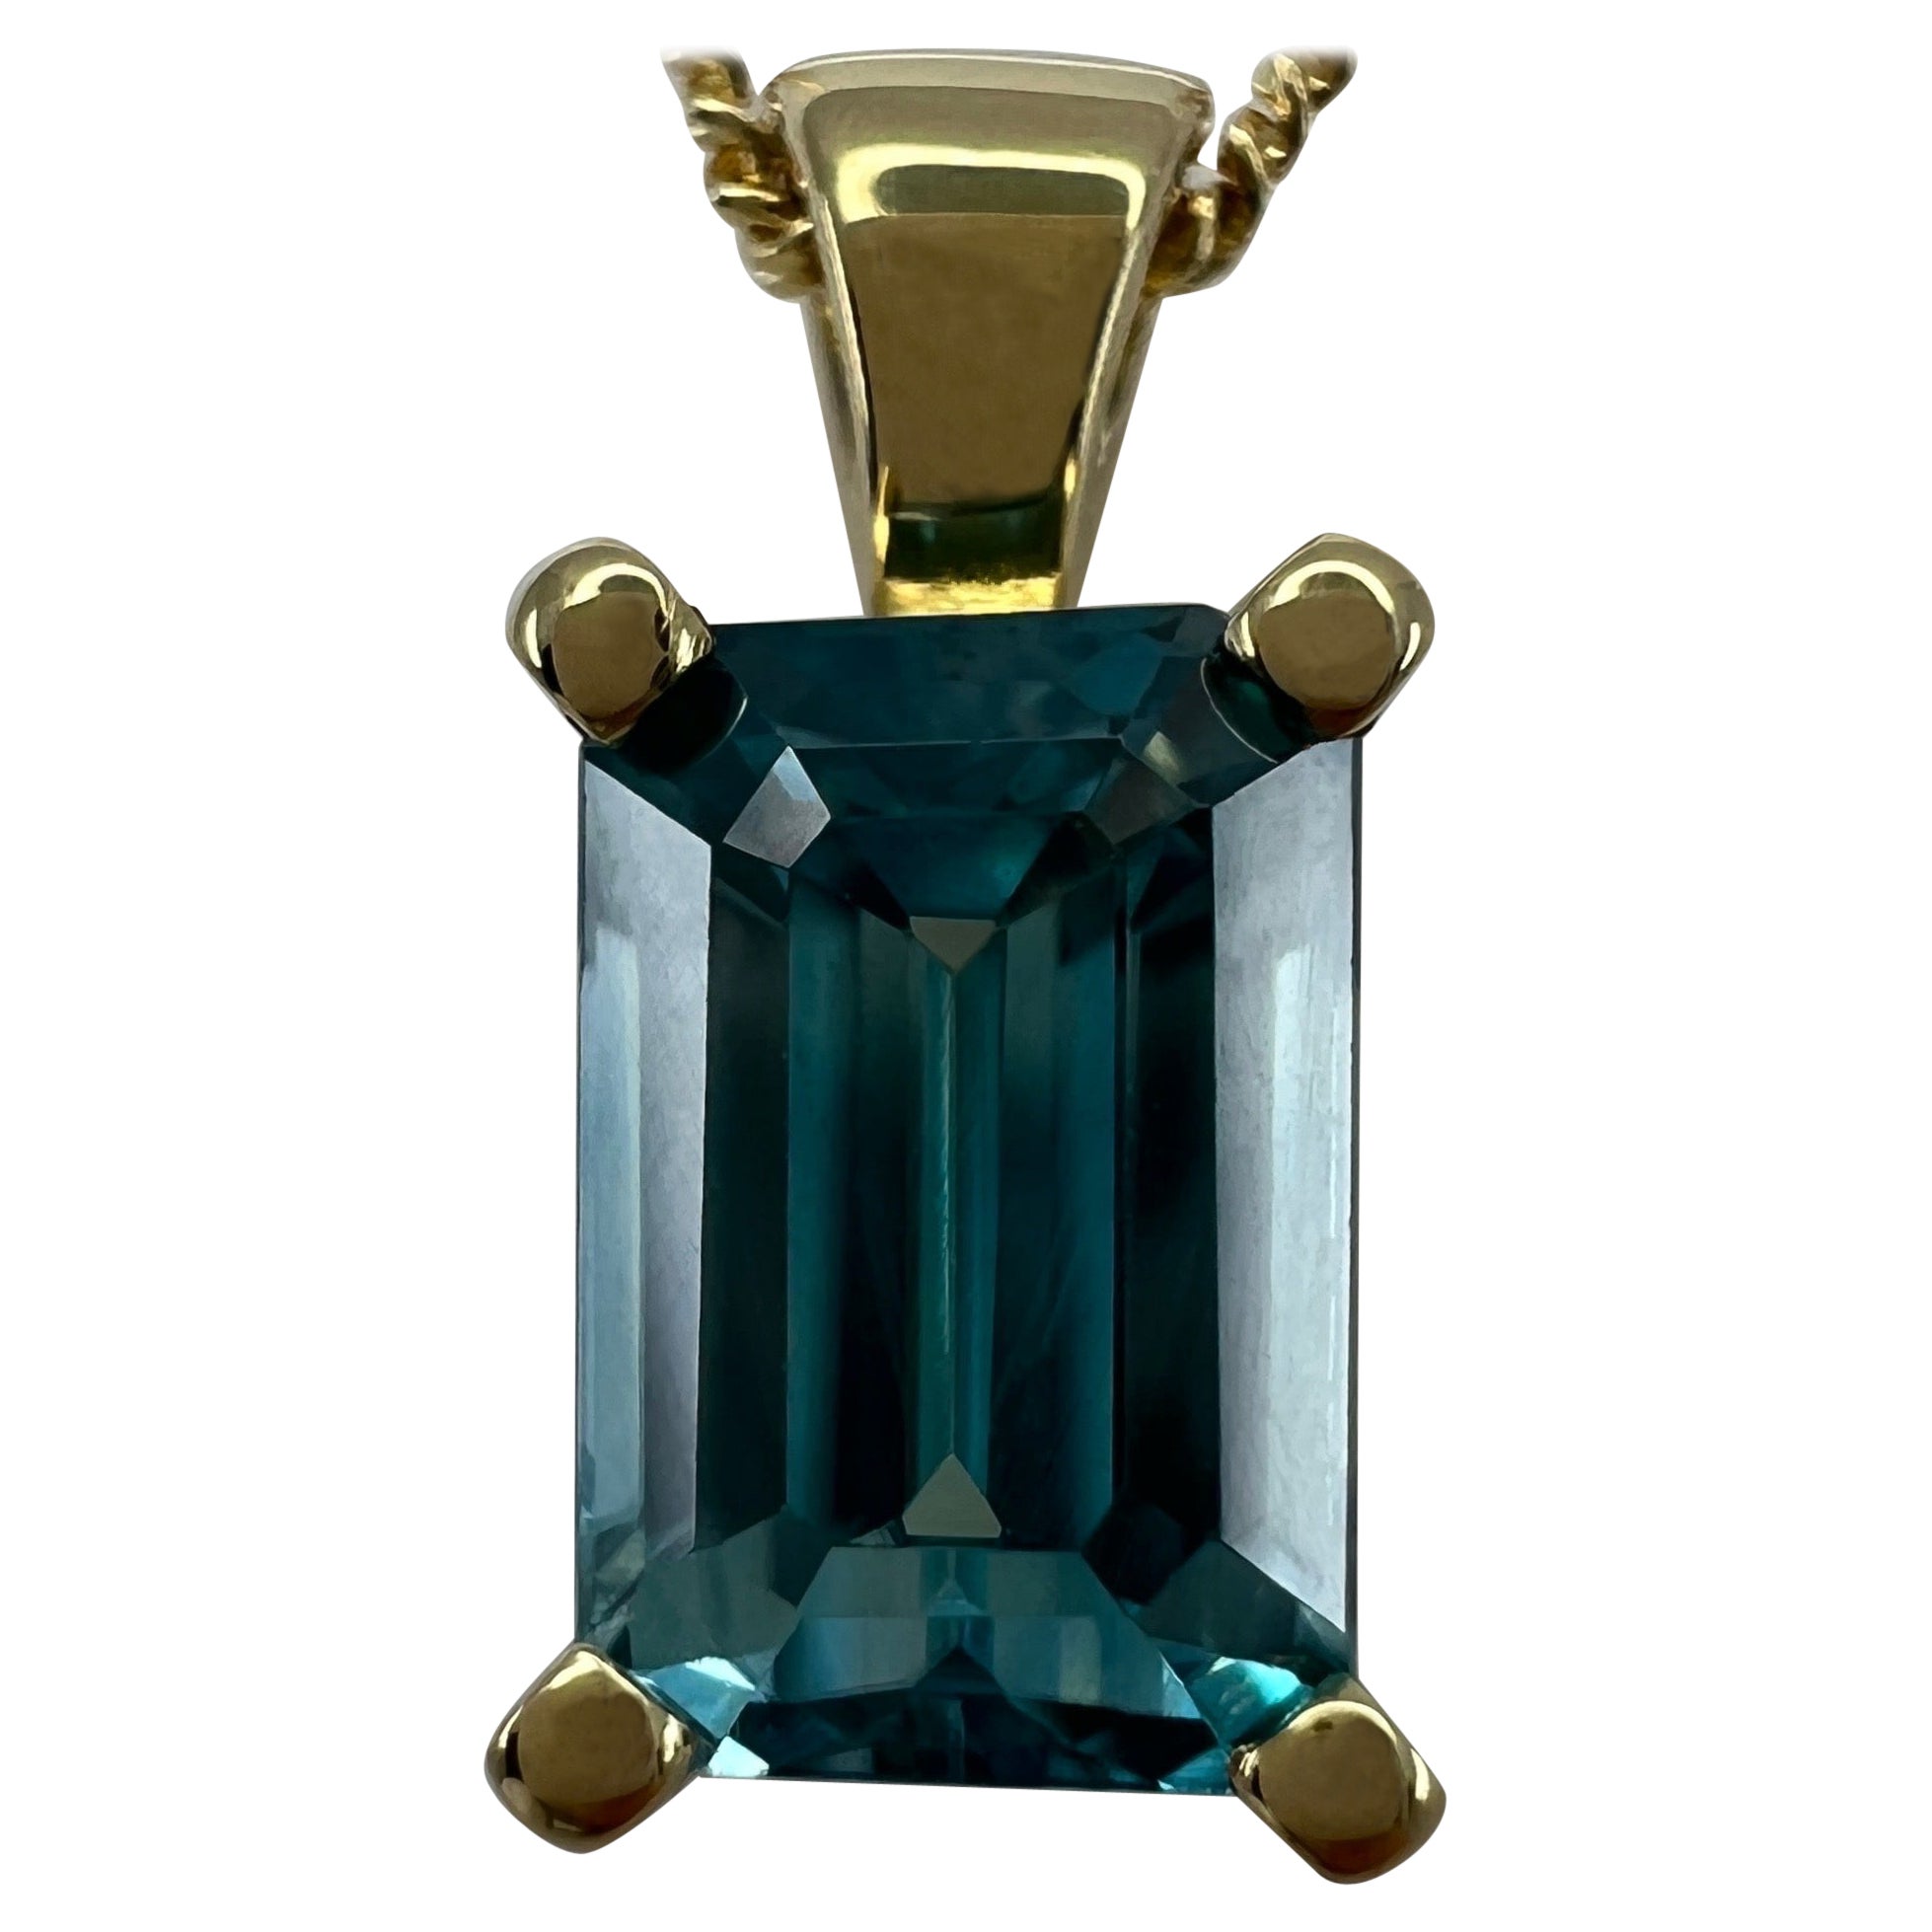 Collier pendentif en or jaune 18 carats avec zircon bleu fluo vif taille émeraude de 2,45 carats